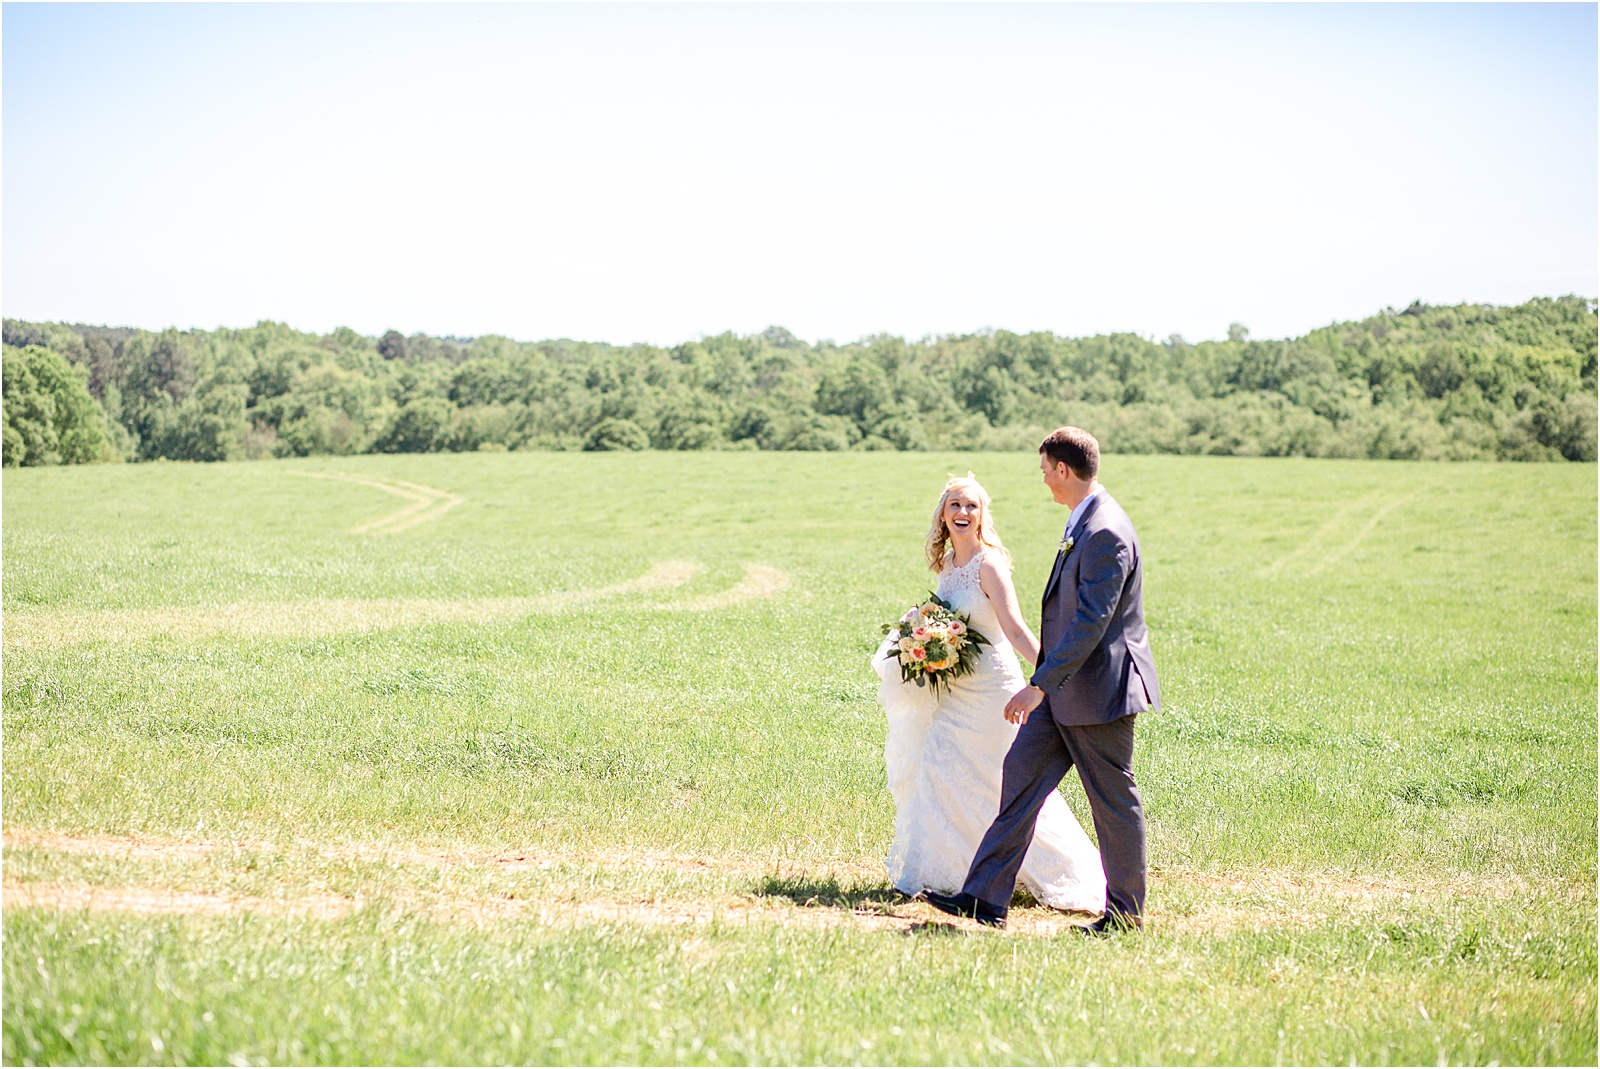 Wedding couple walking through field